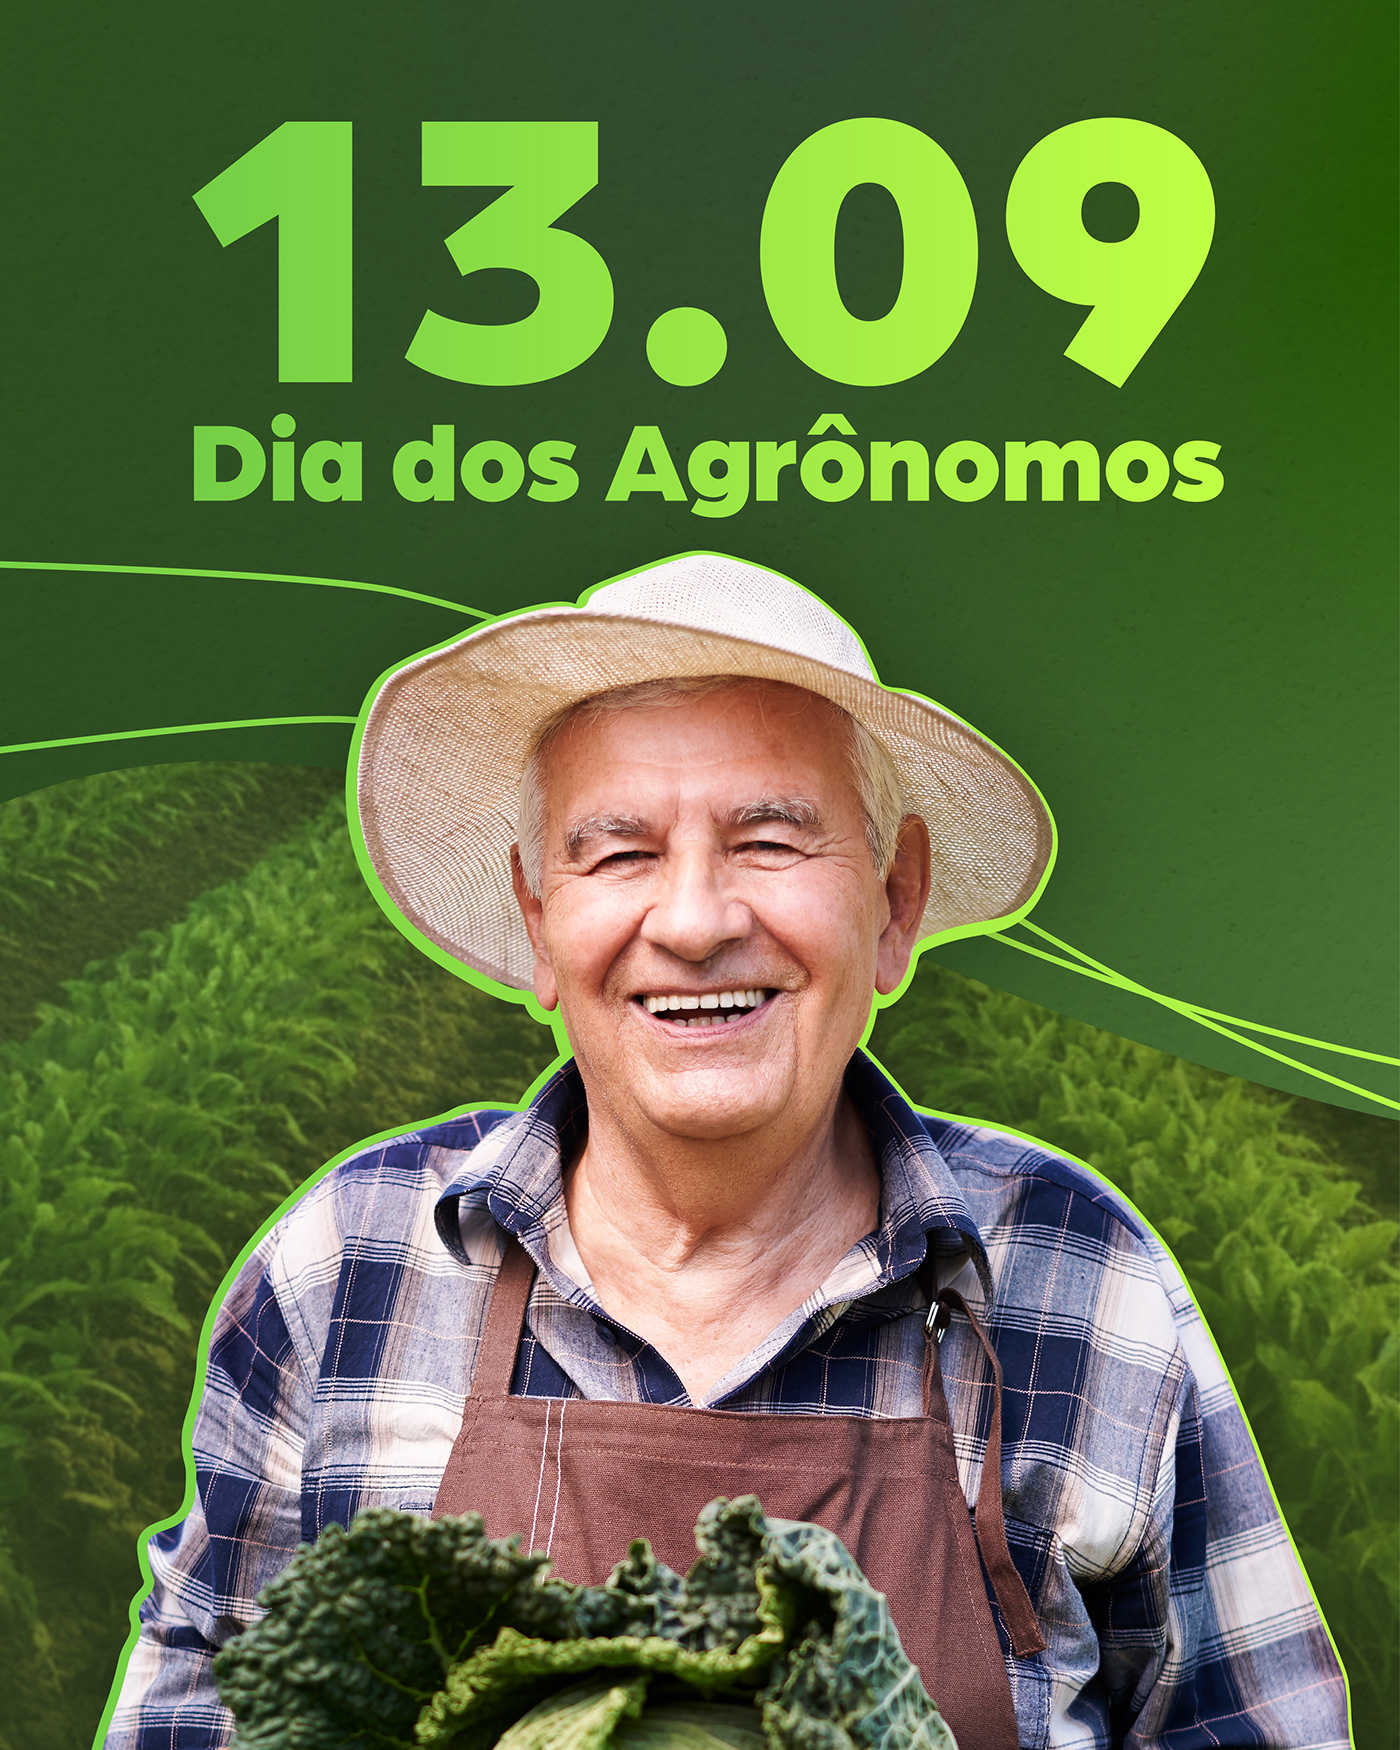 Agronomy agriculture Social media post design gráfico Socialmedia instagram agronomo agronomía